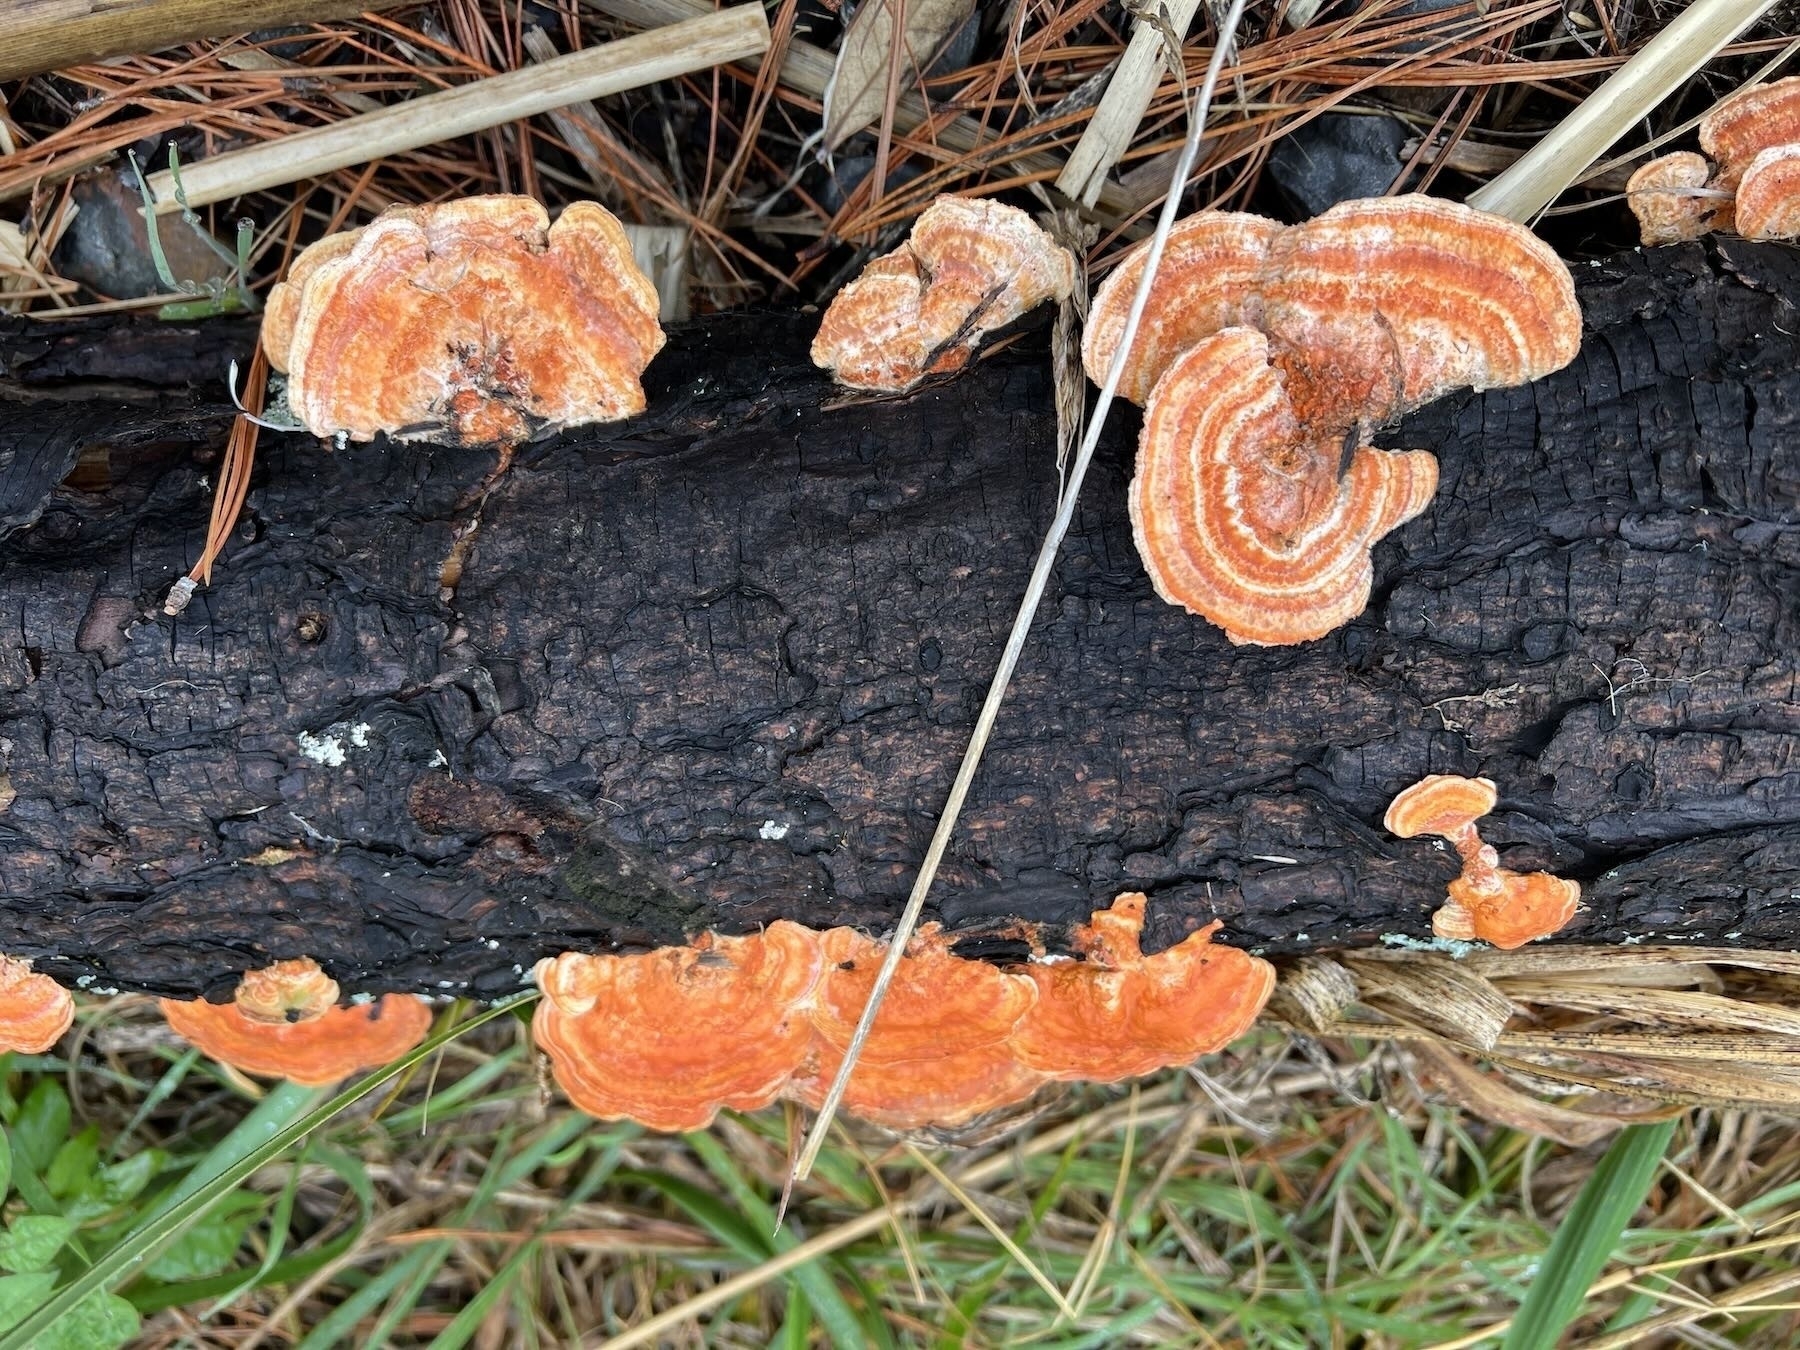 Interesting orange fungi on a dark log.